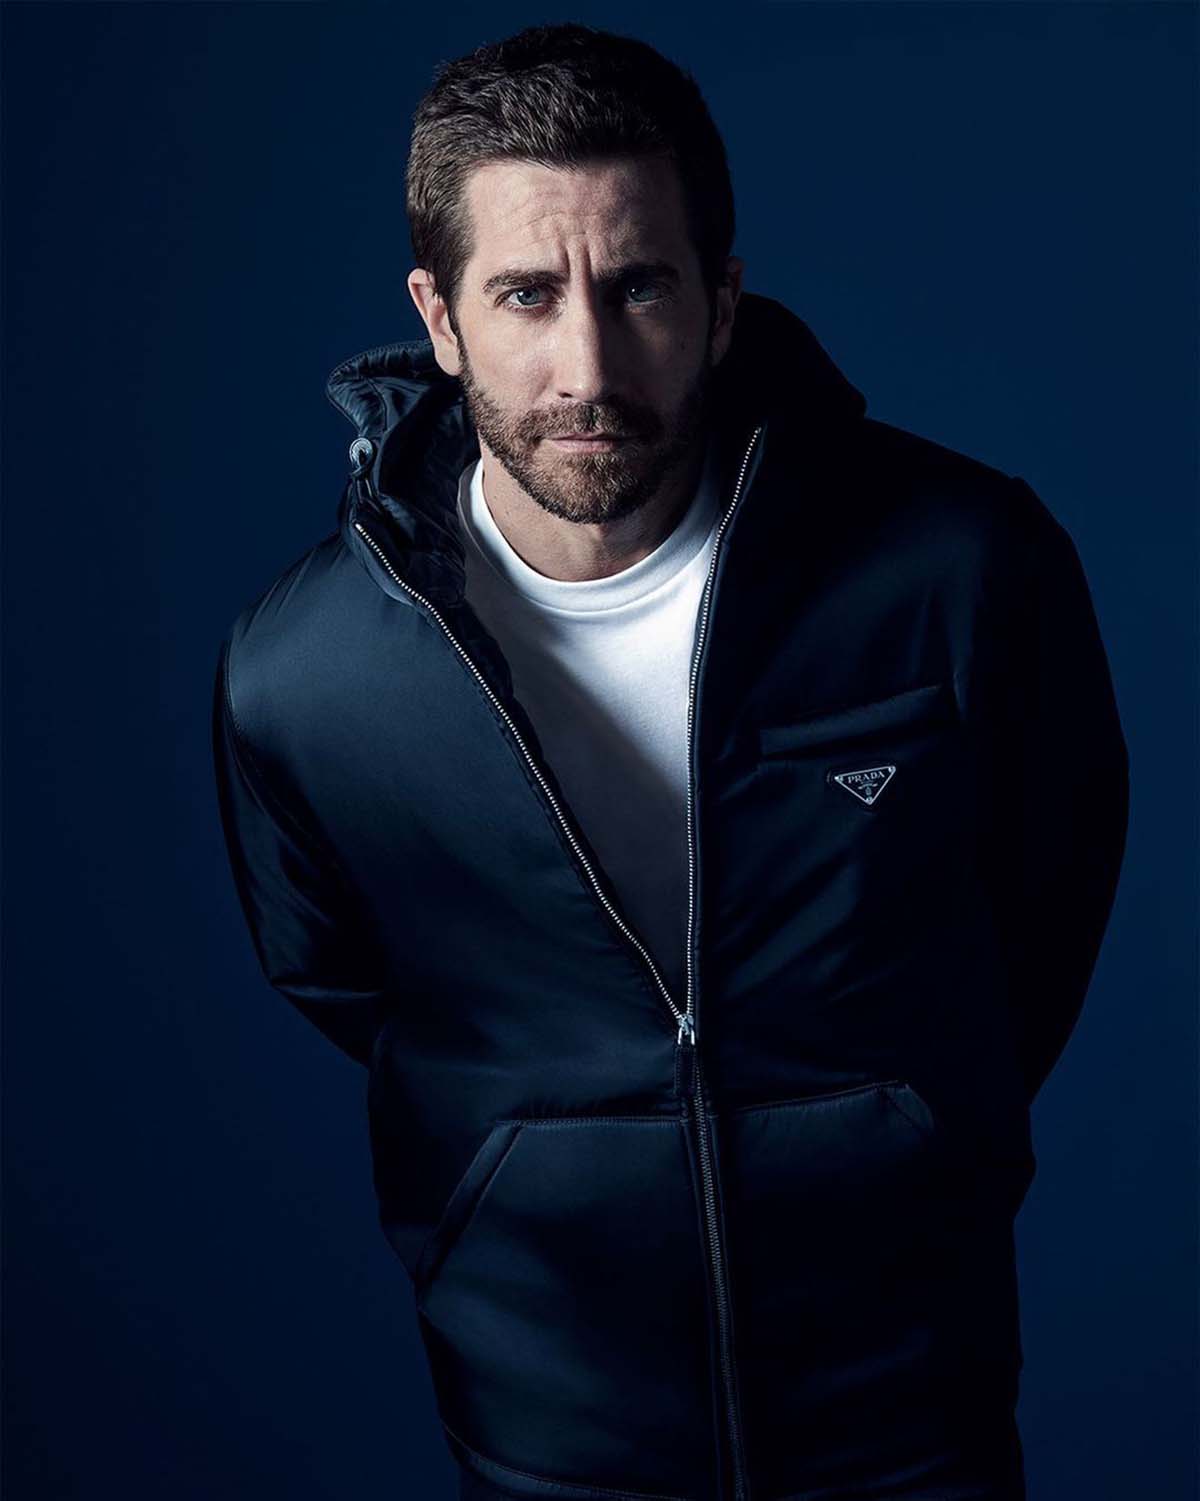 Jake Gyllenhaal Is the Face of Prada's New Fragrance